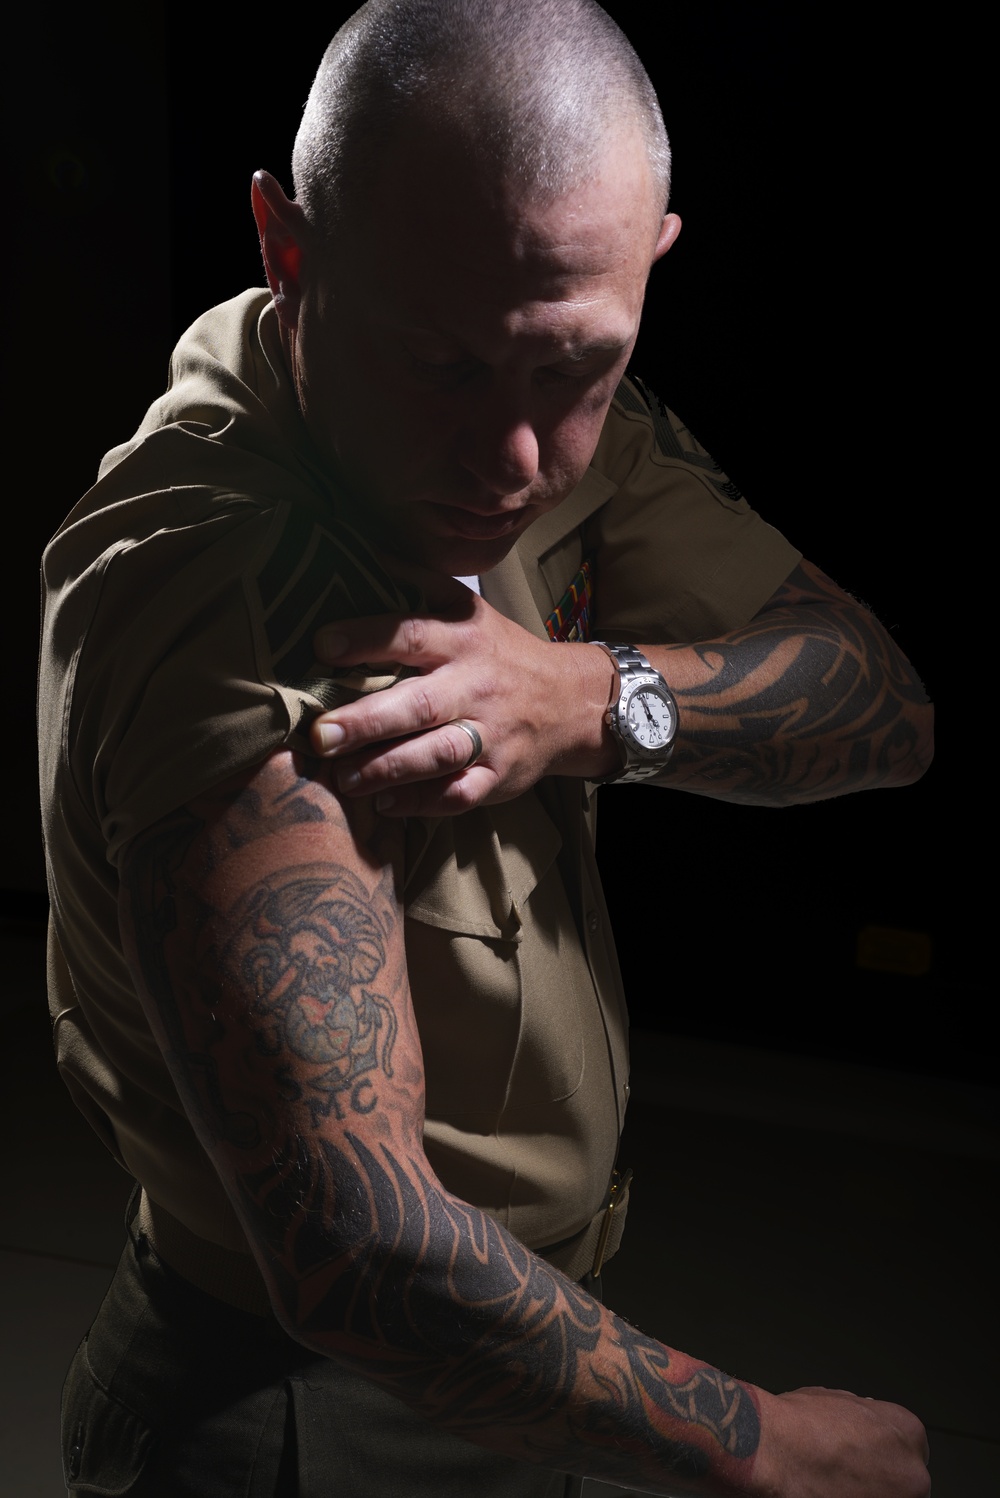 DVIDS - News - Immortalizing memories: the Marine 'moto tat'